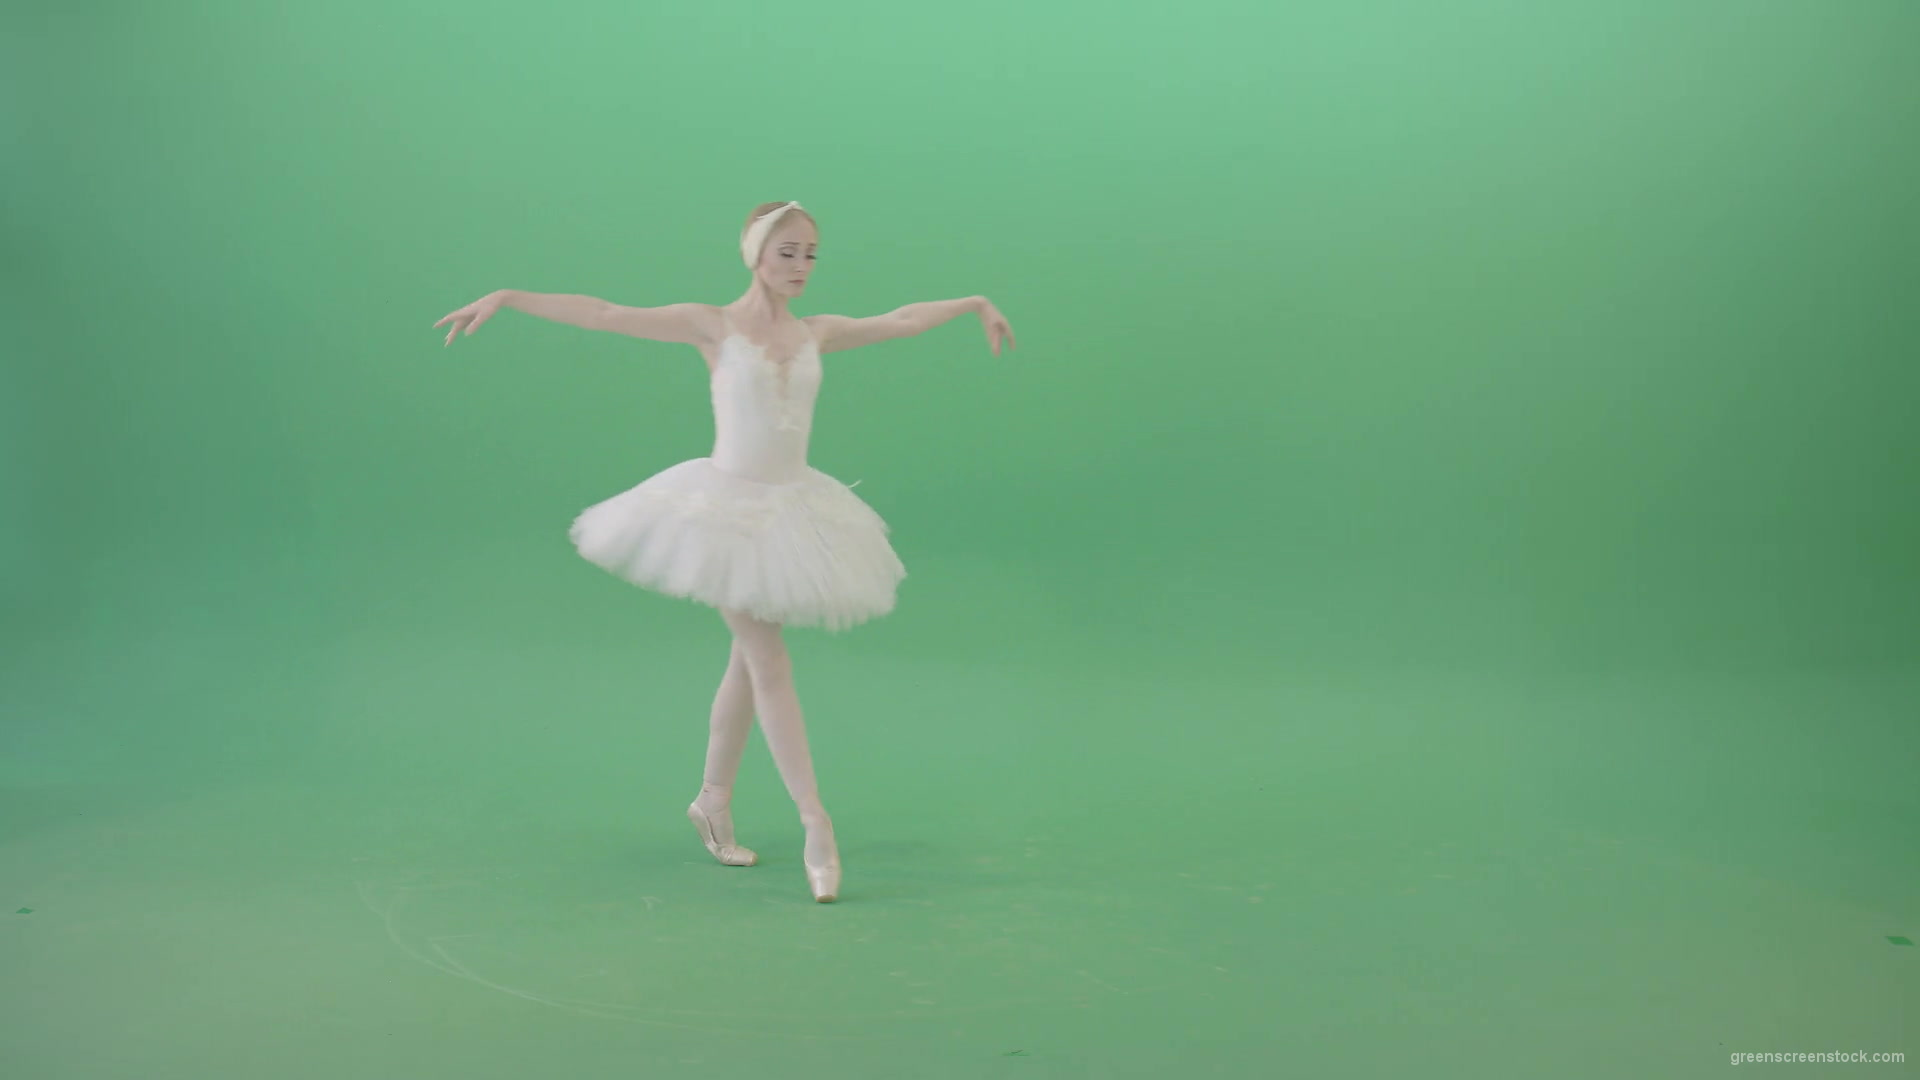 Beautifull-Swan-Lake-Ballerina-waving-hand-wigns-on-green-screen-4K-Video-Footage-1920_002 Green Screen Stock